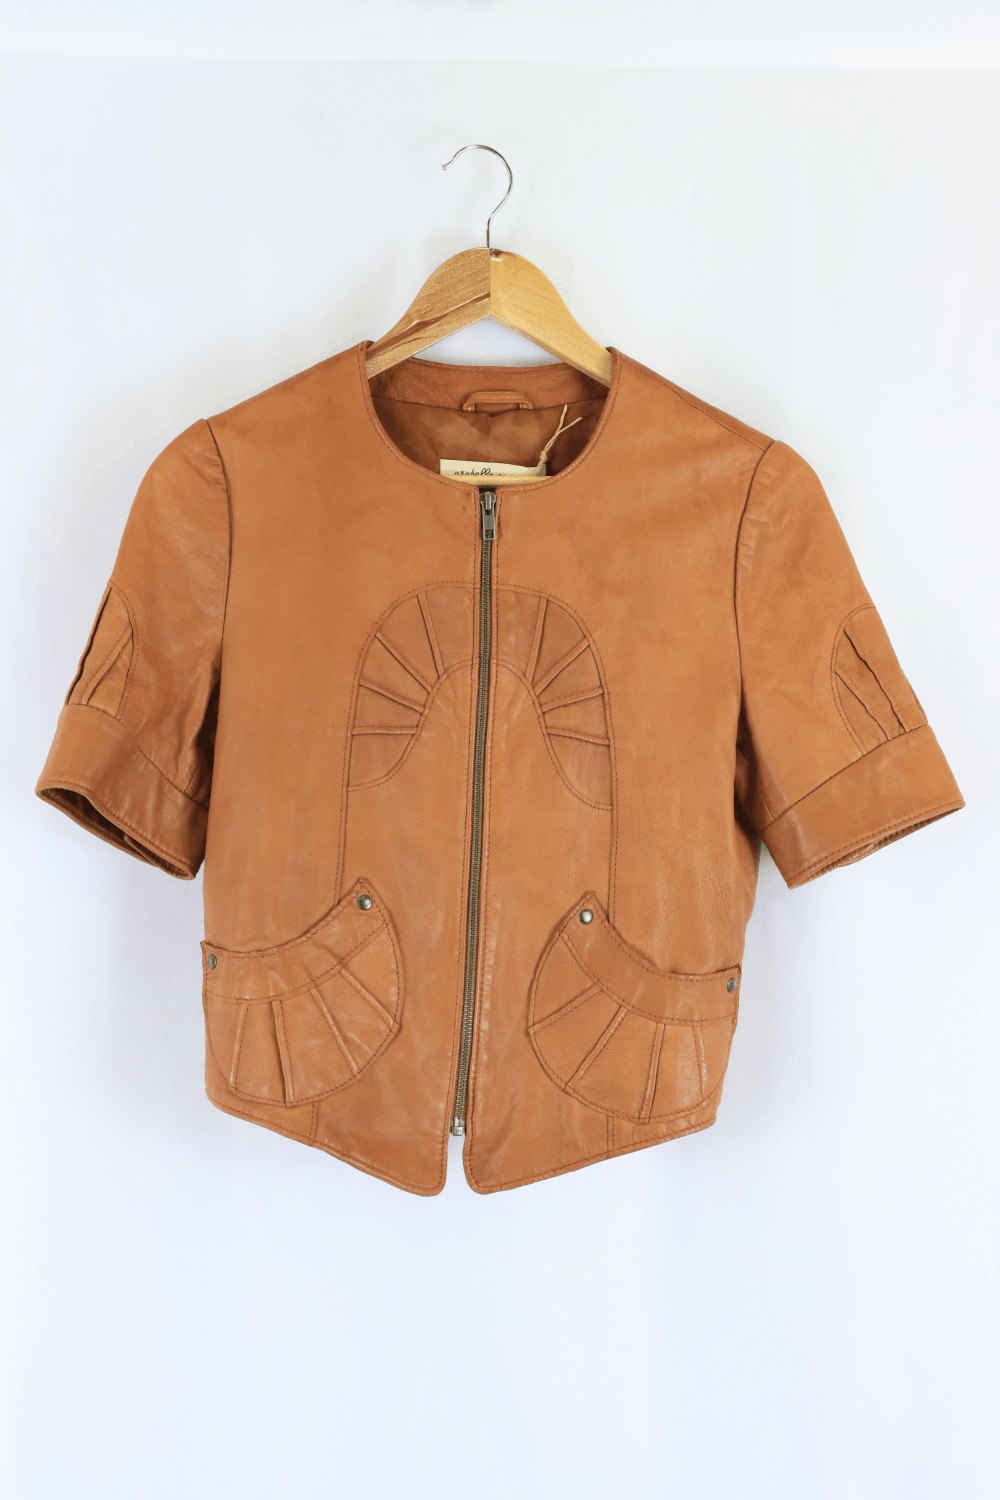 Arabella Ramsay Brown Leather Short Sleeve Jacket 10